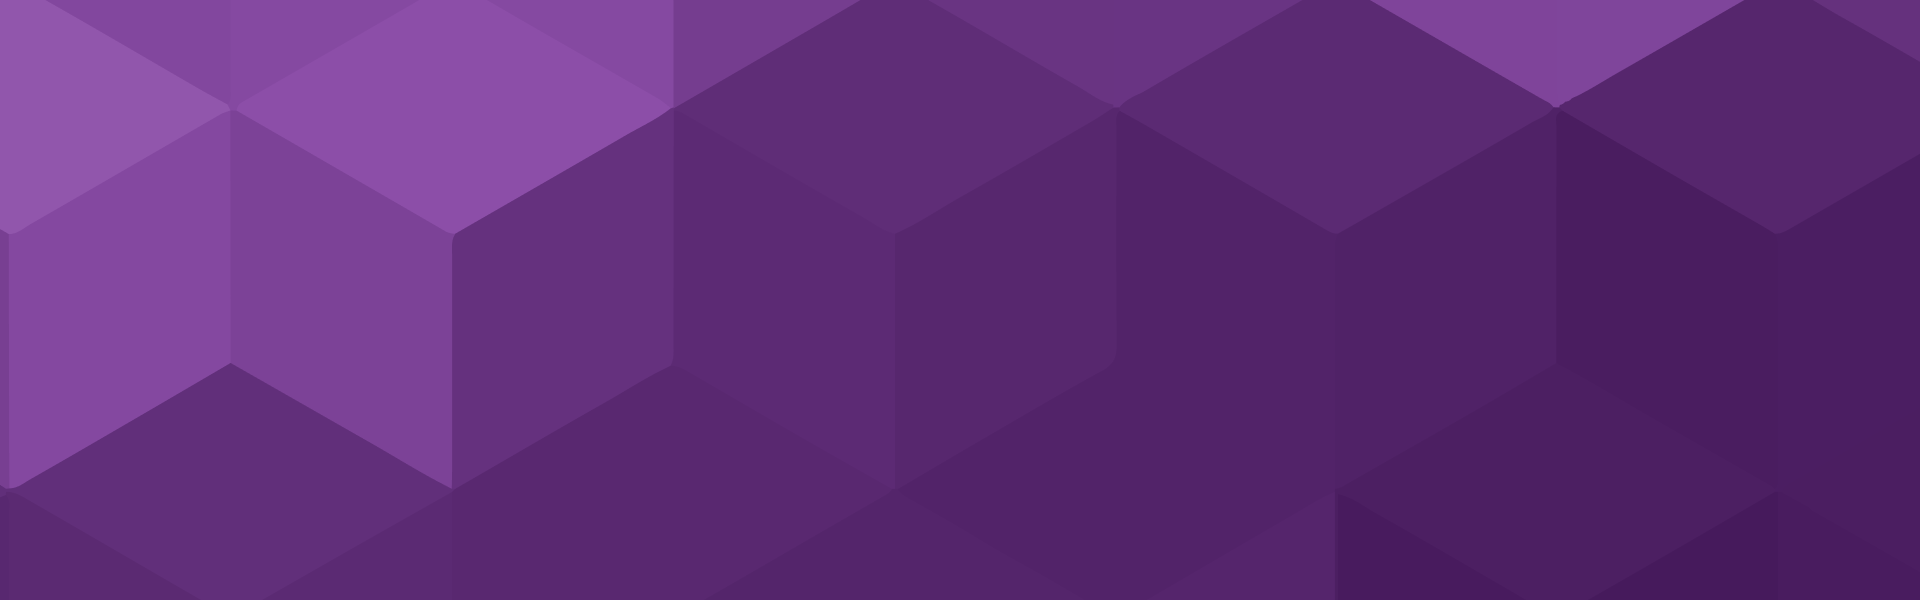 fondo con patrón hexadecimal púrpura